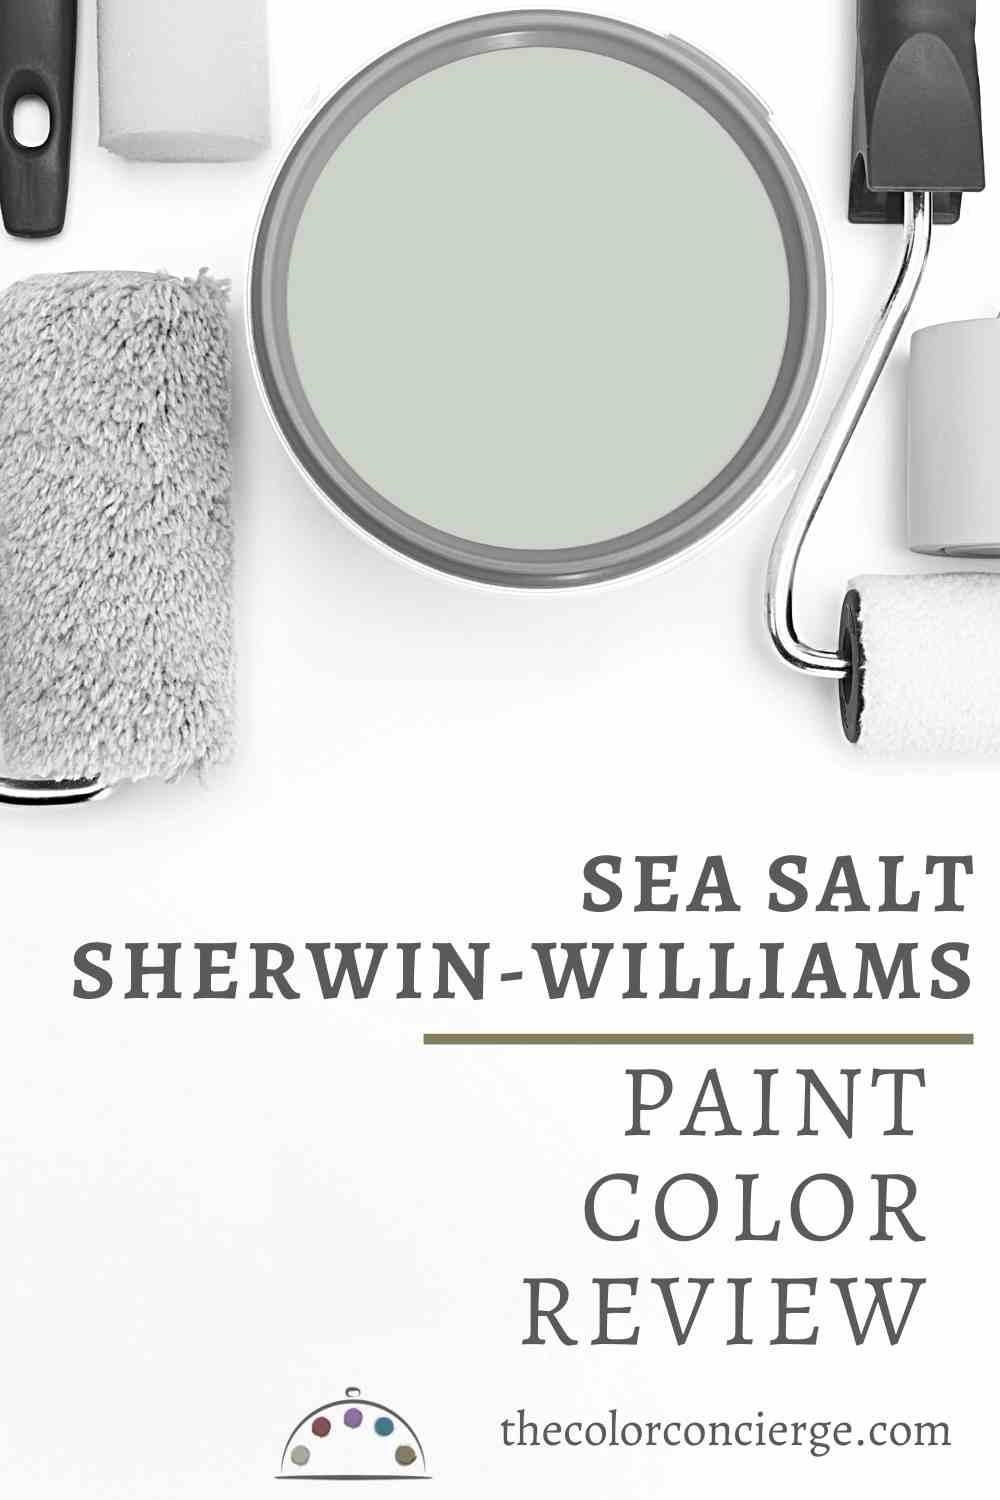 Sherwin-Williams Sea Salt Color Review